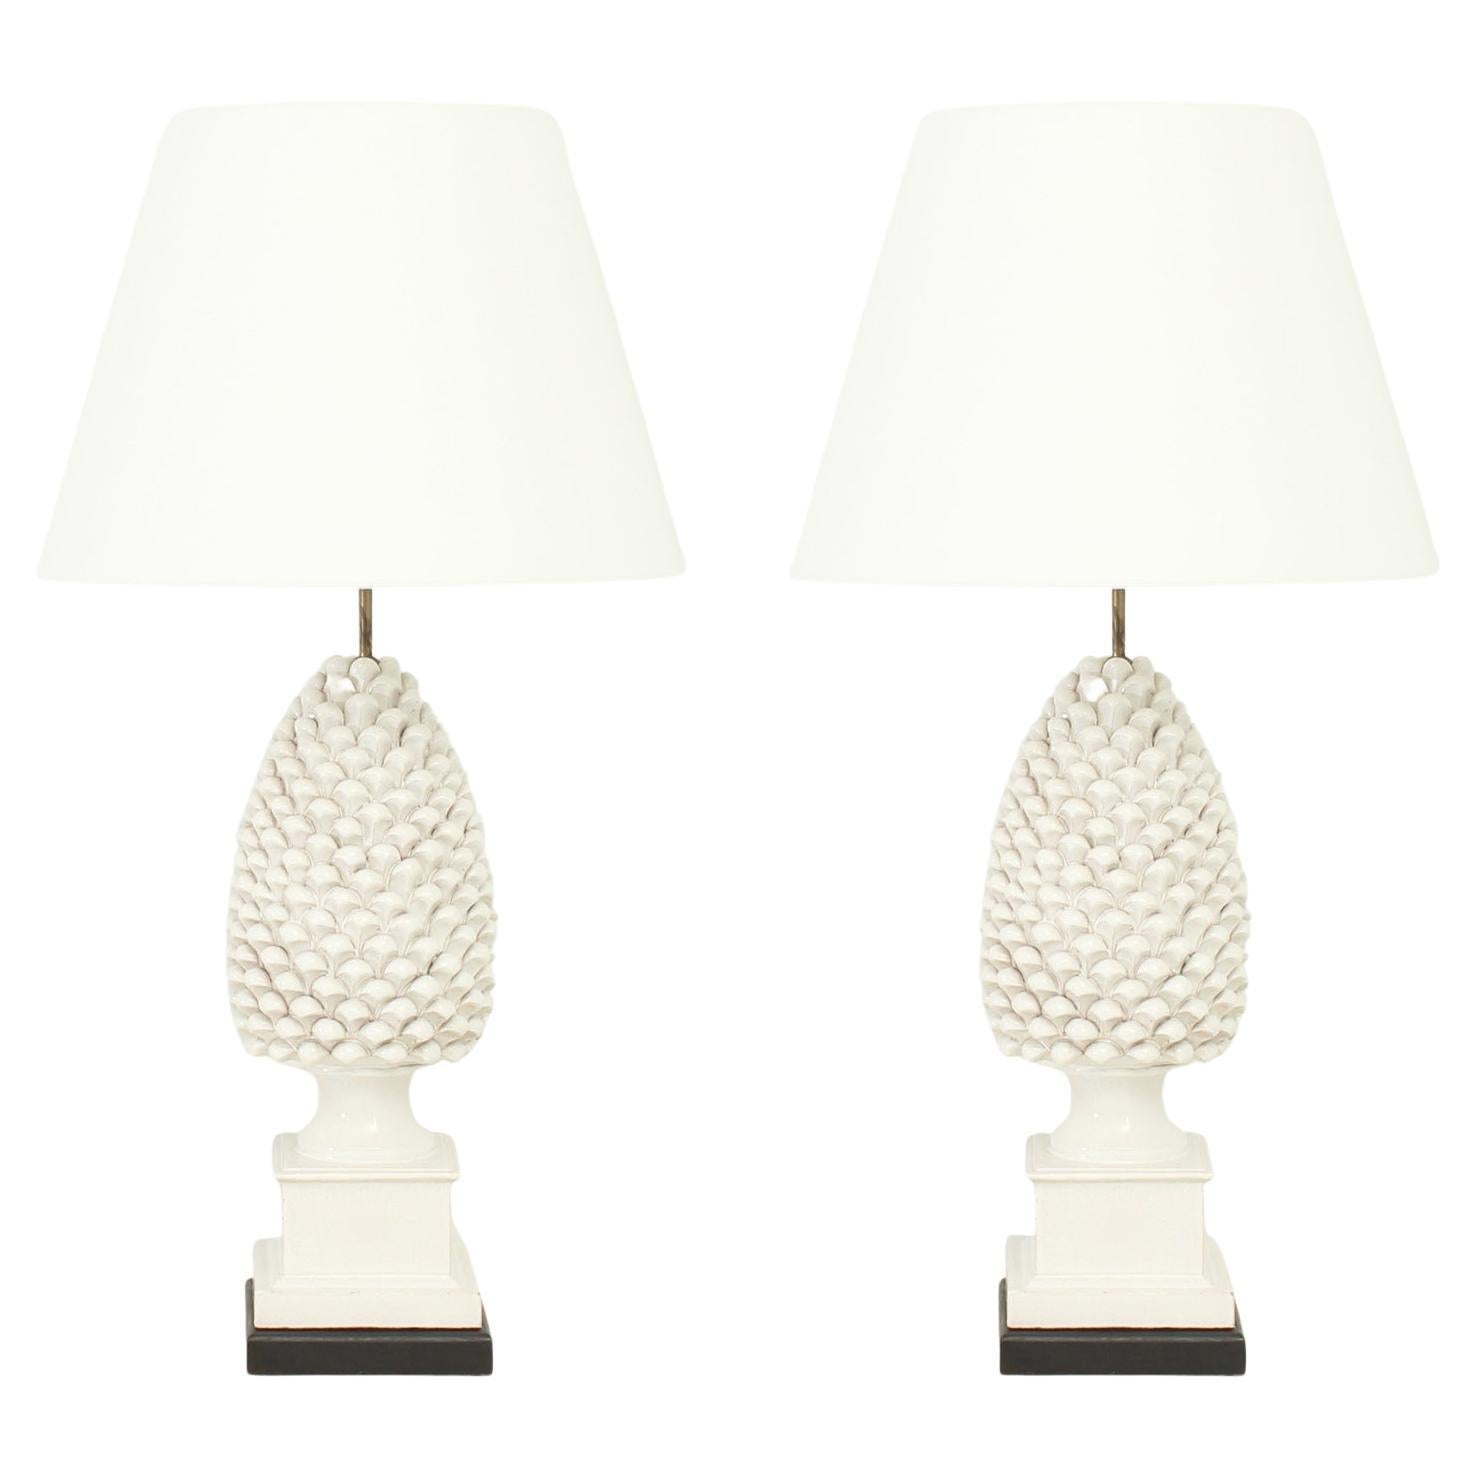 Pair of Pineapple Ceramic Table Lamps by Antonio Campuzano, Spain, 1960's